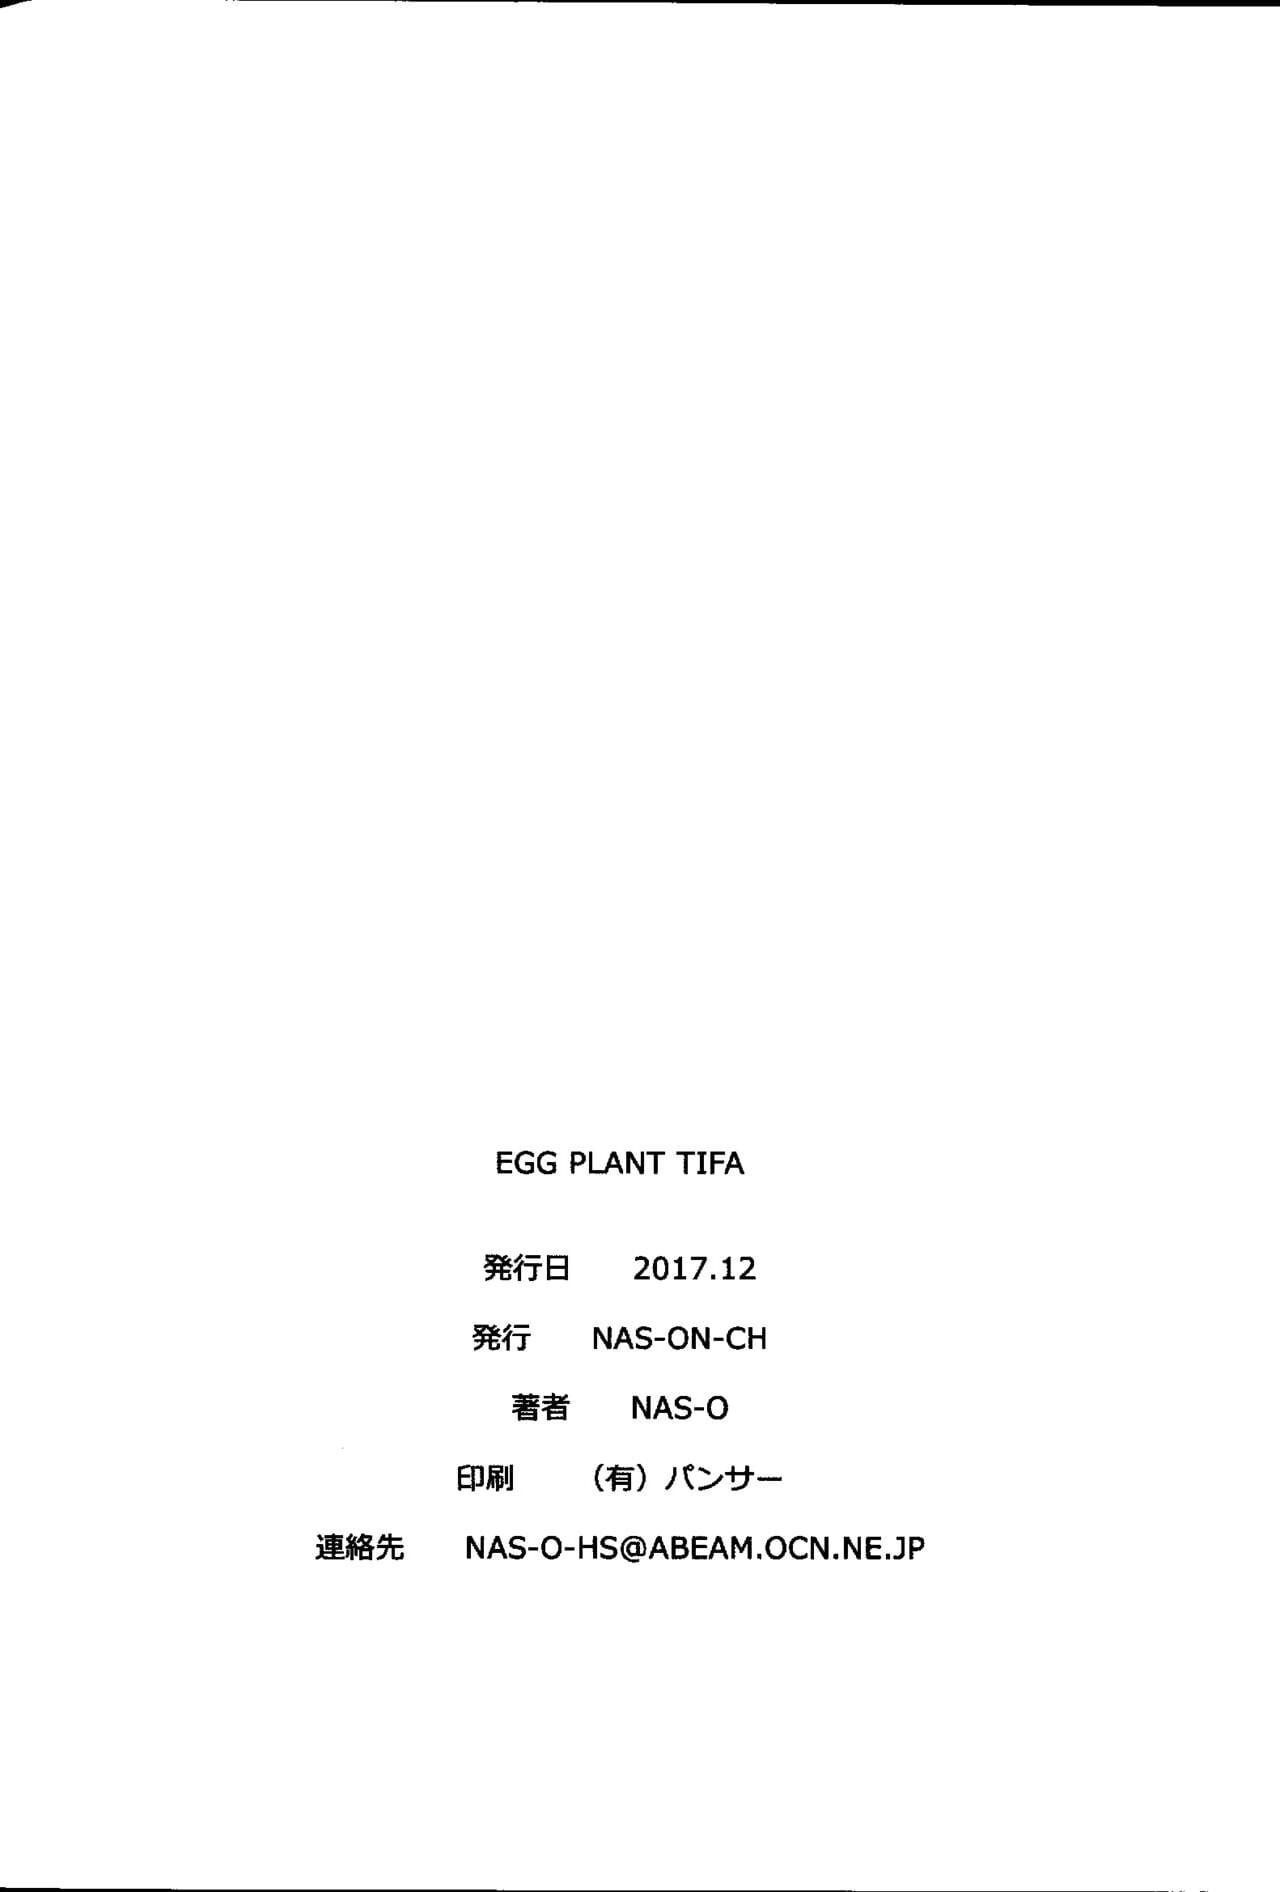 ovo planta tifa page 1